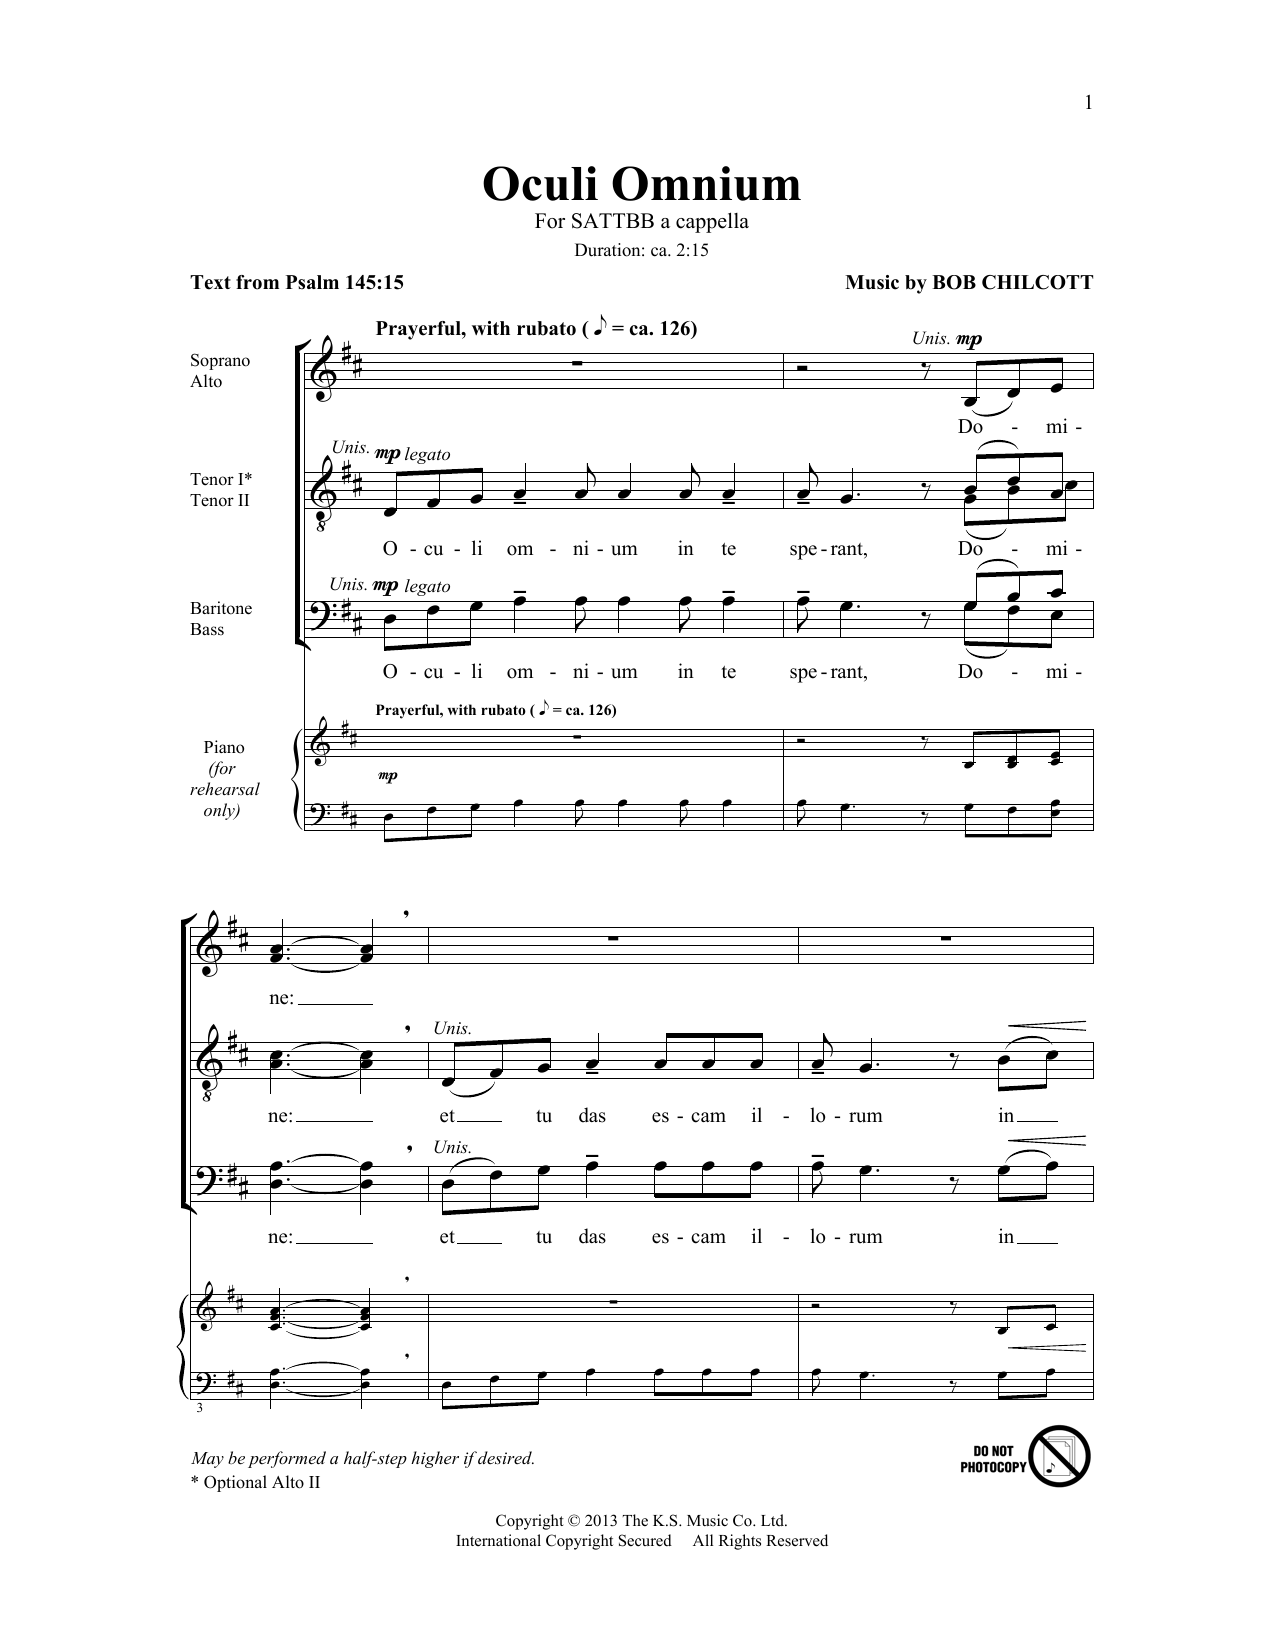 Bob Chilcott Oculi Omnium Sheet Music Notes & Chords for SATB - Download or Print PDF